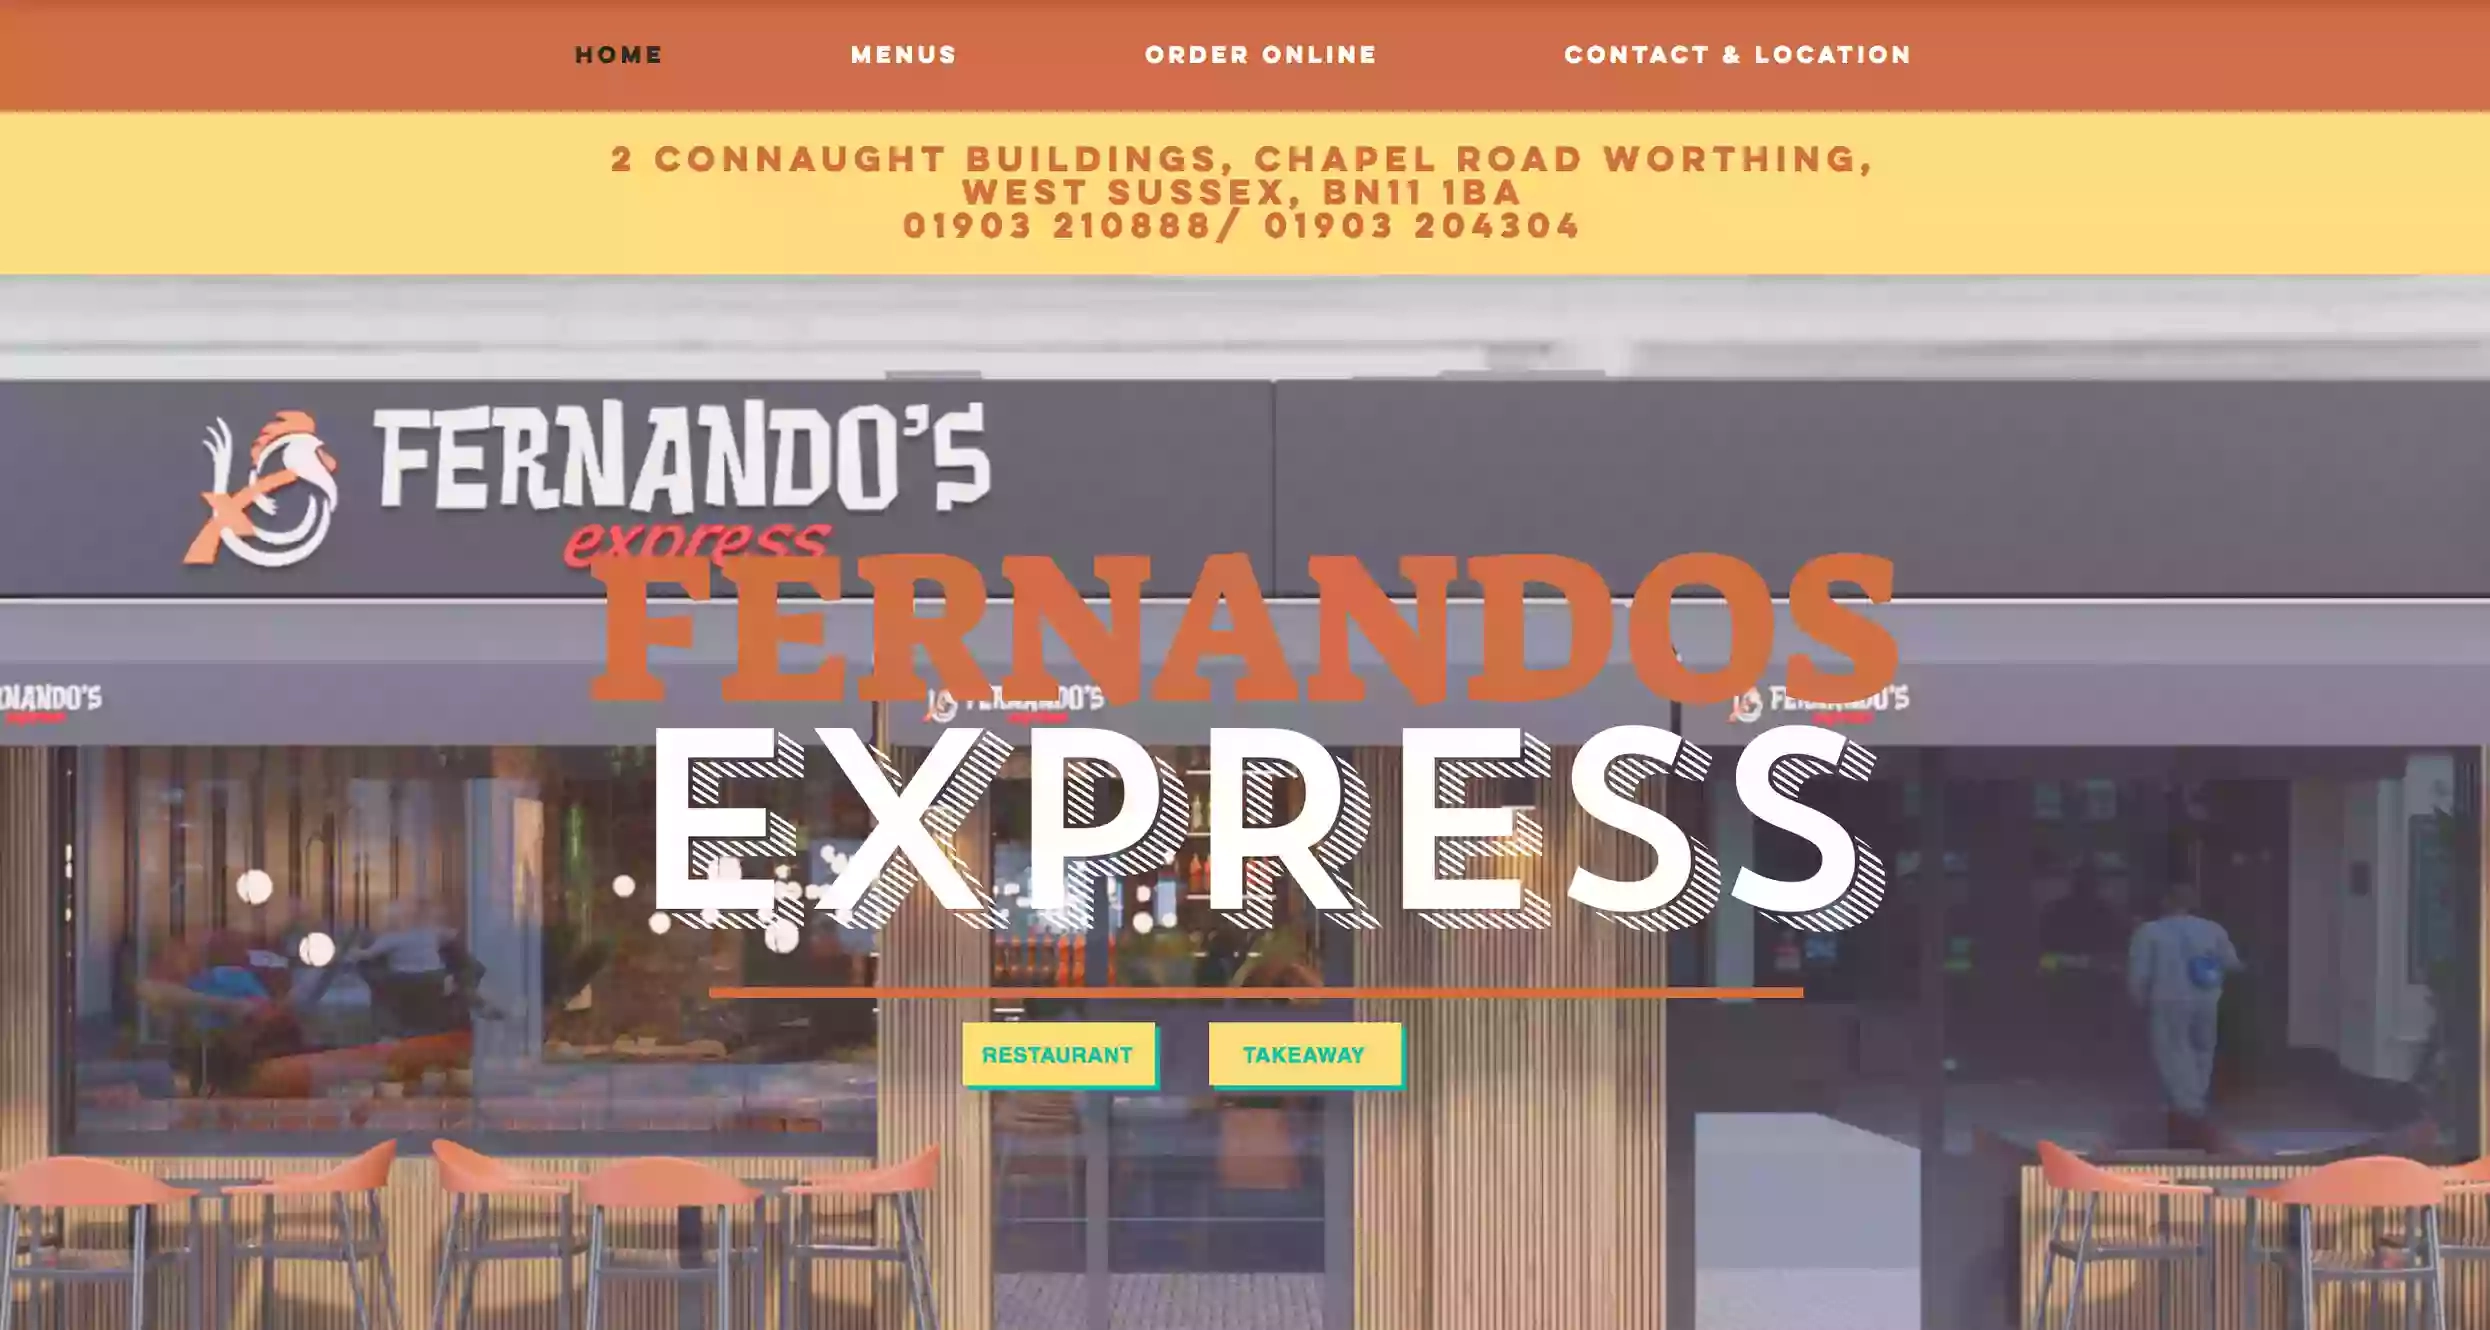 Fernandos Express